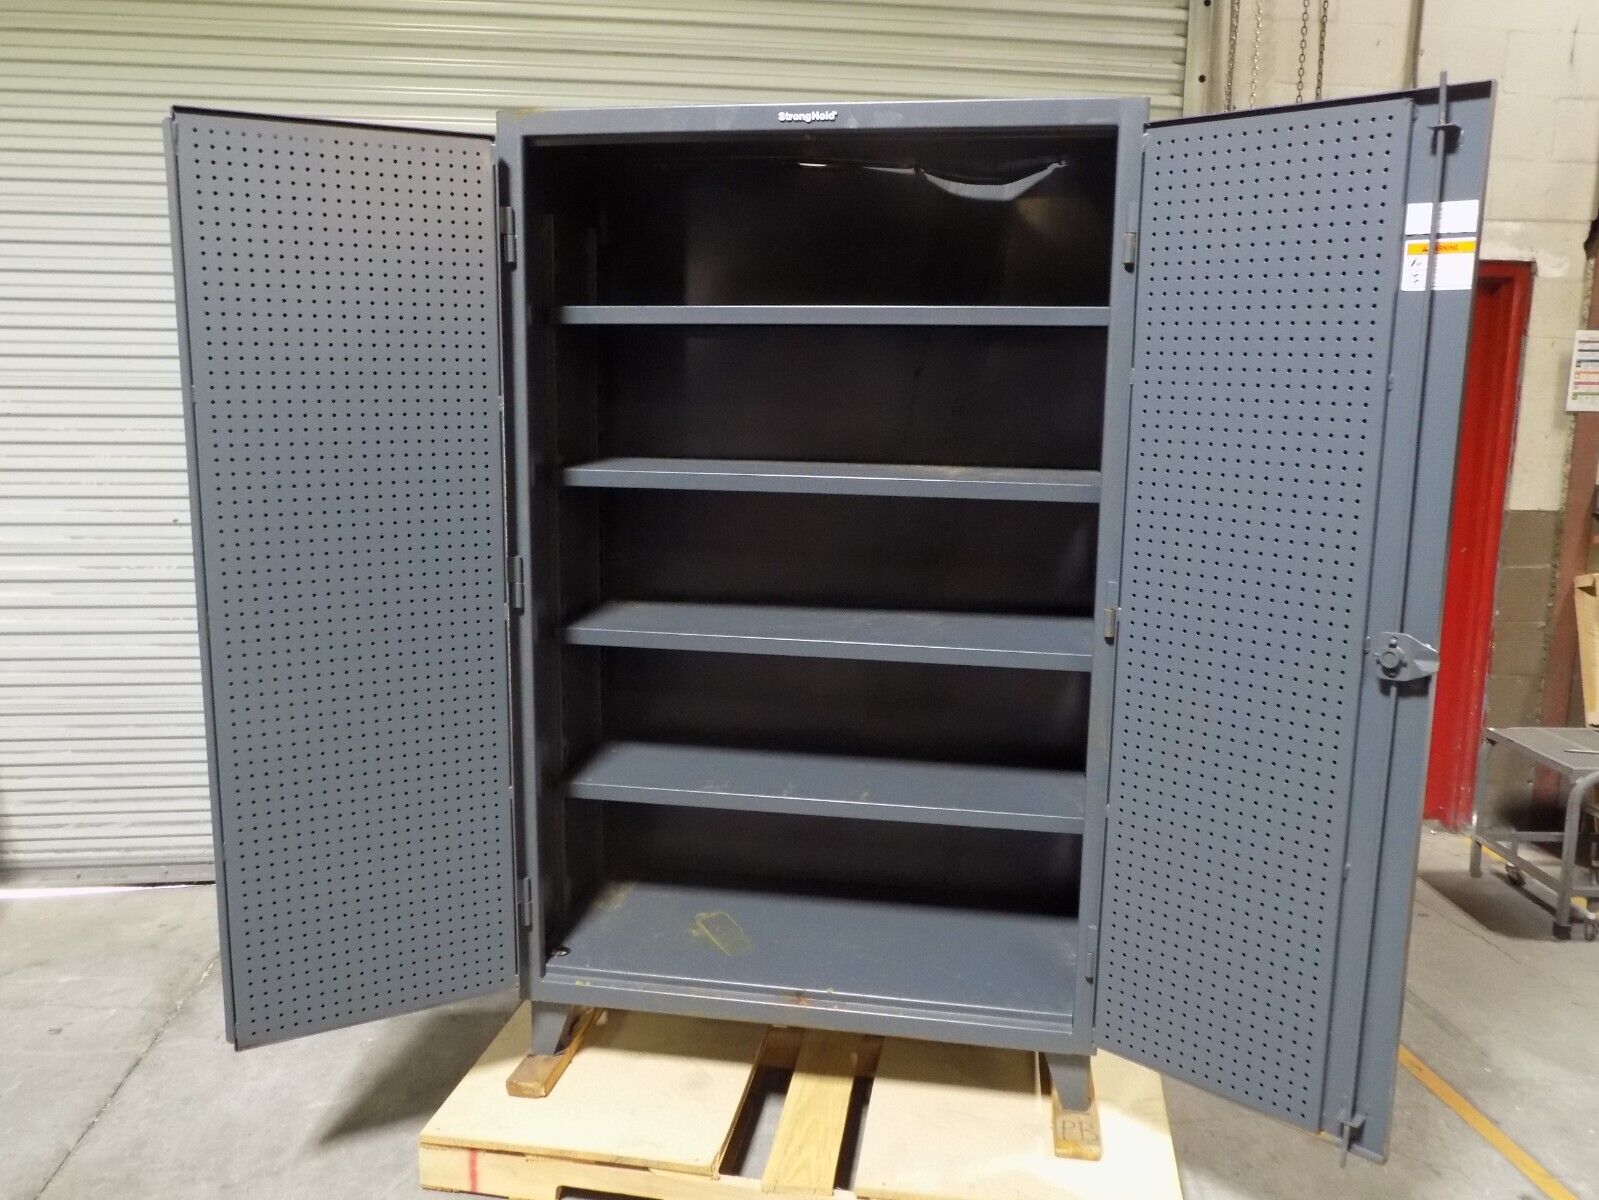 36 x 12 x 48'' (72 Bins Included) - Small Parts Bin Storage Shelving Unit